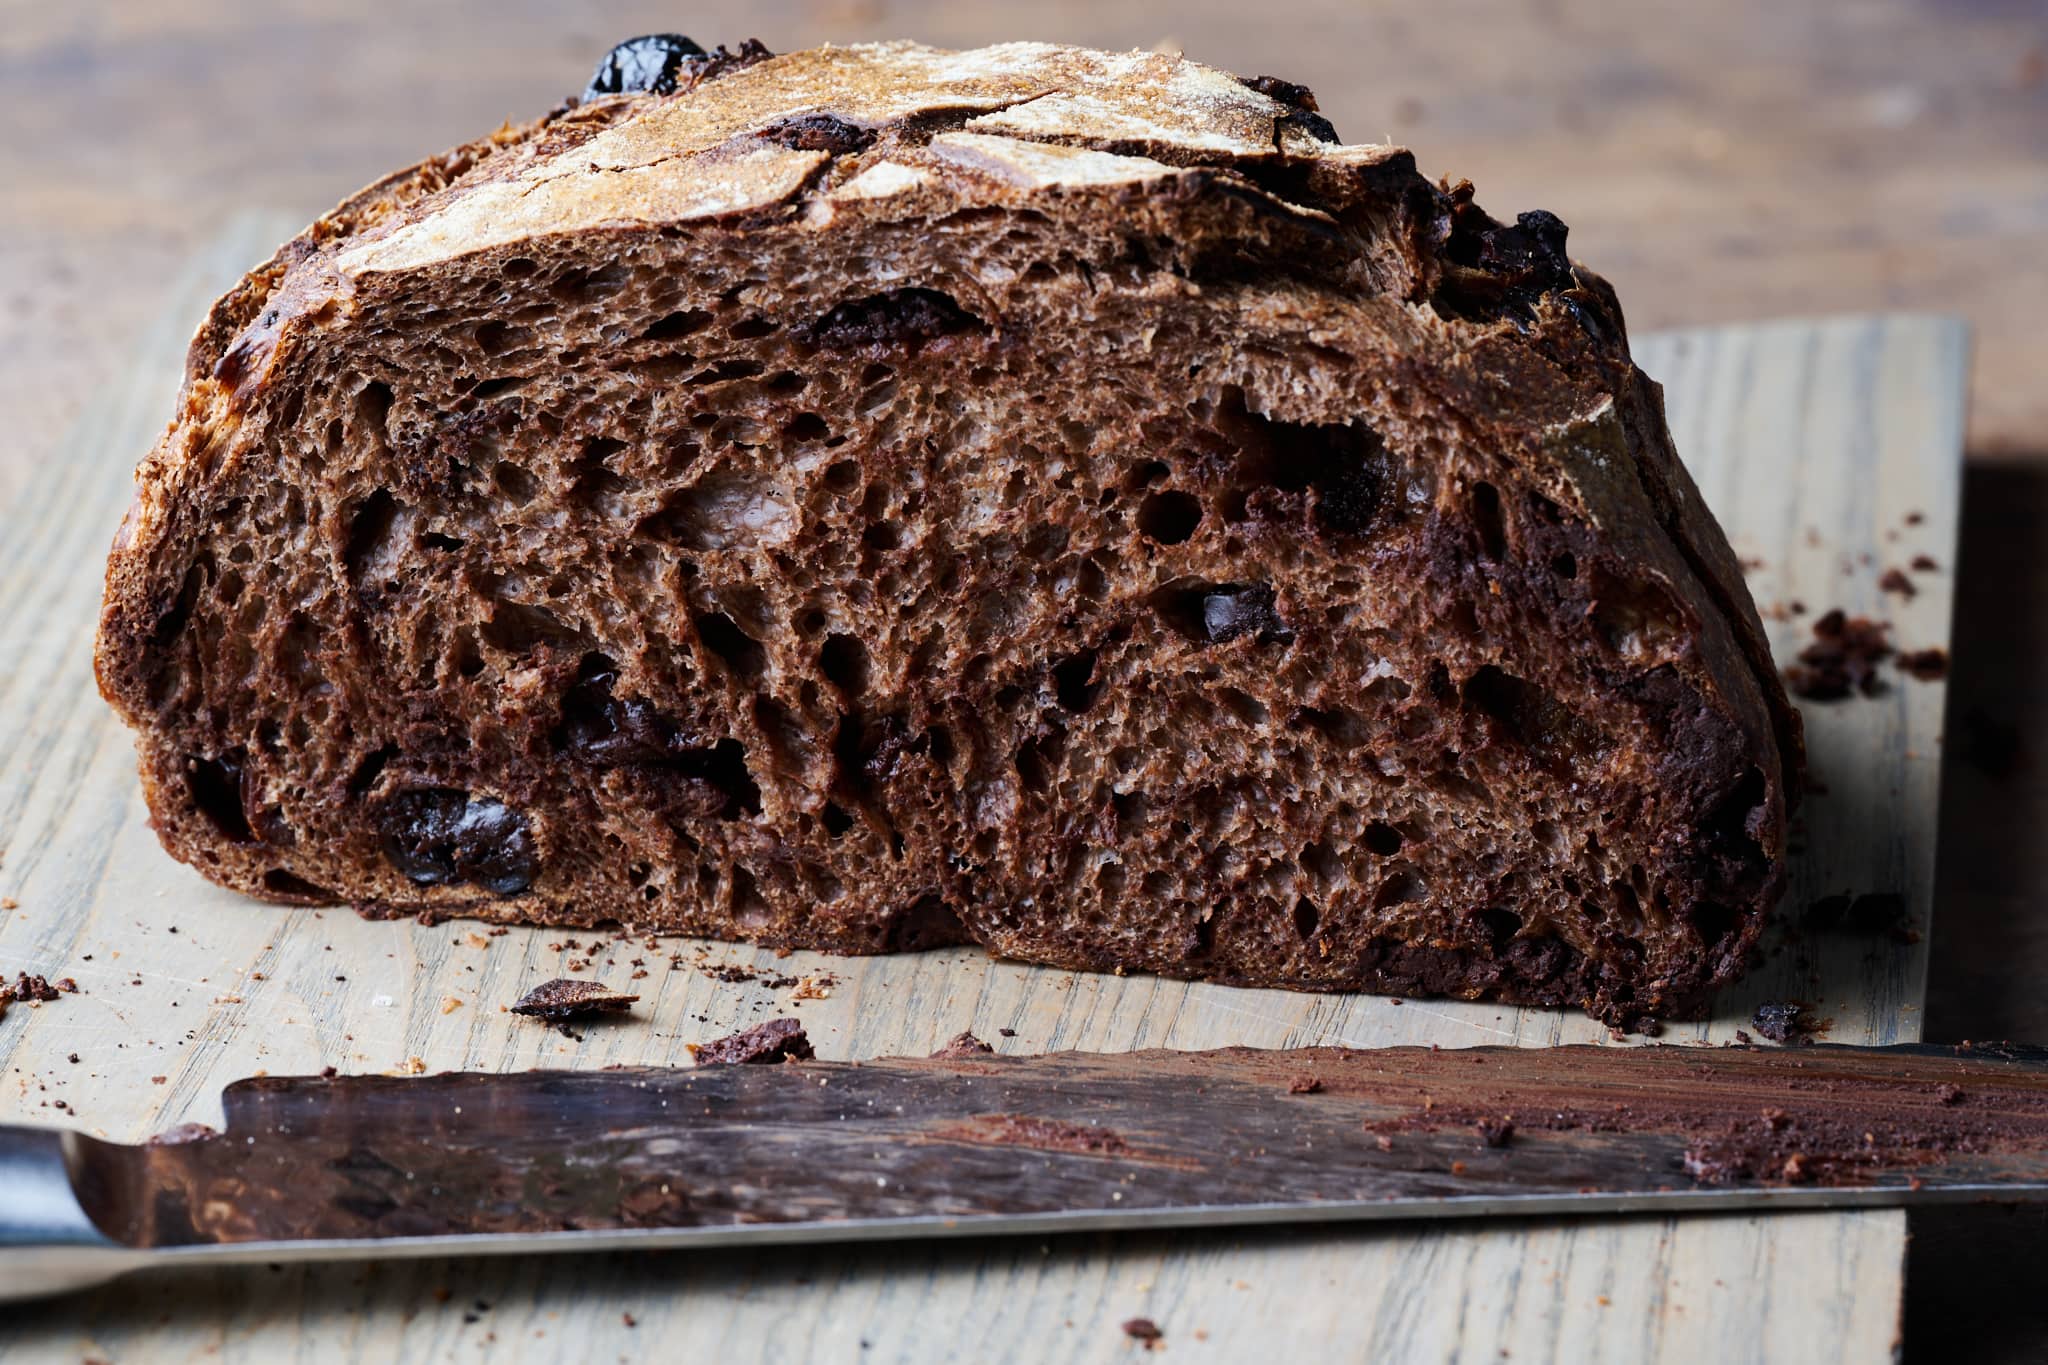 Round Bread World Chocolate Cake - 1 kg